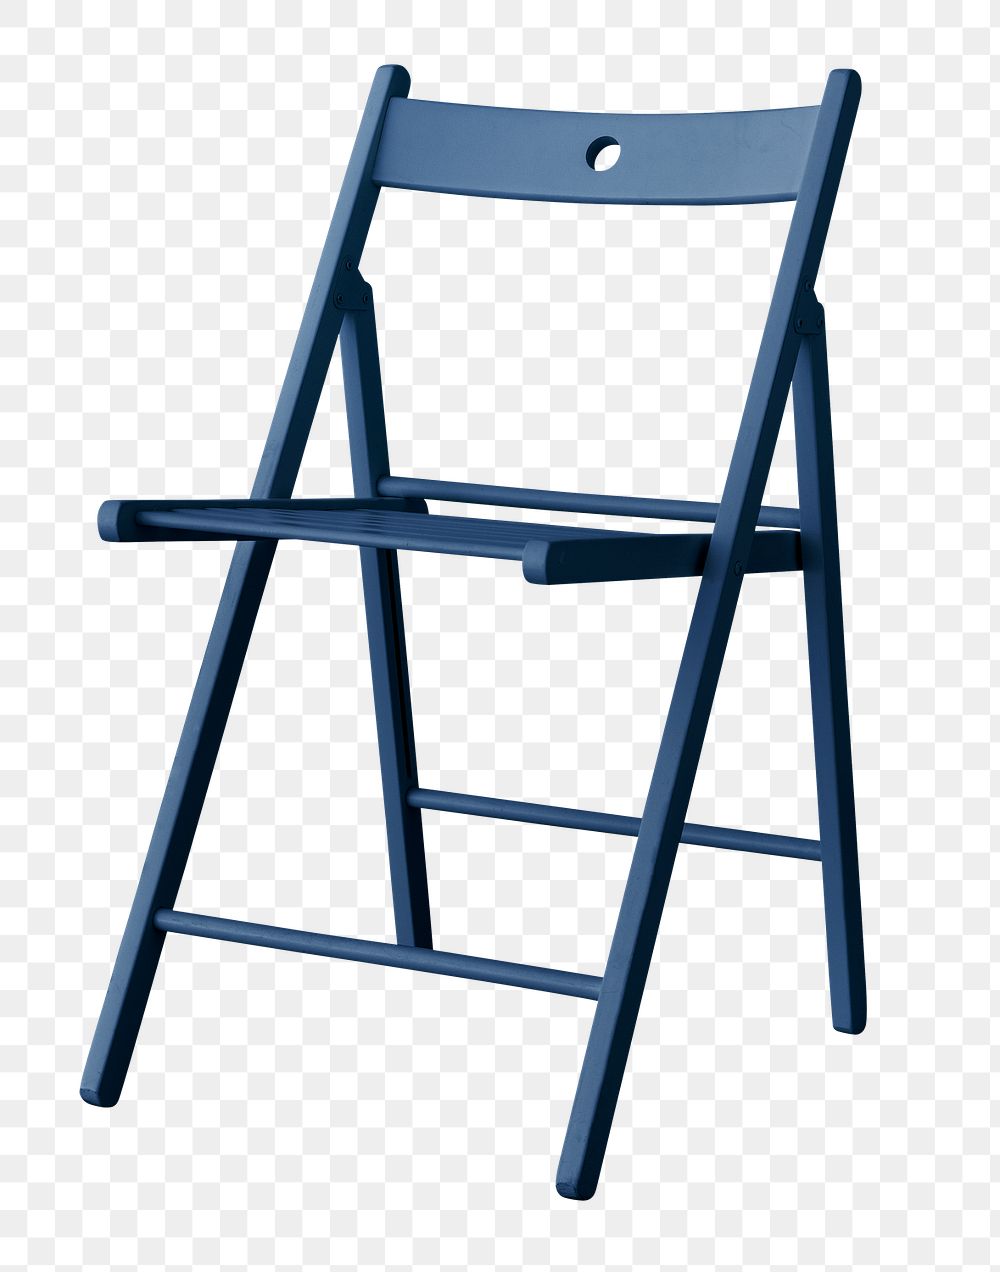 Modern blue chair design element